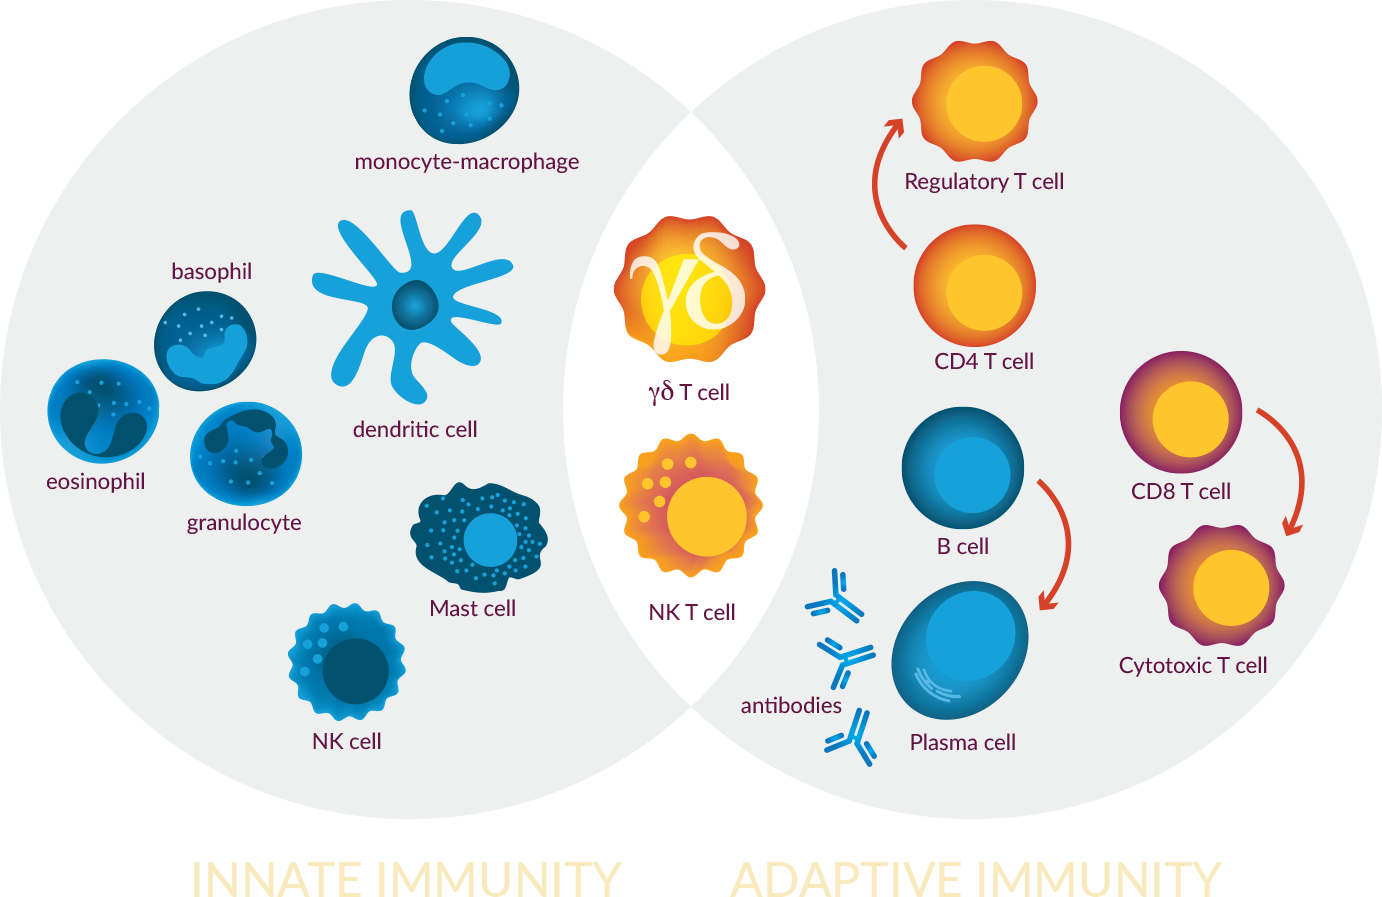 Vγ9Vδ2 (Vgamma9 Vdelta2) T cells: Bridge innate and adaptive immune responses